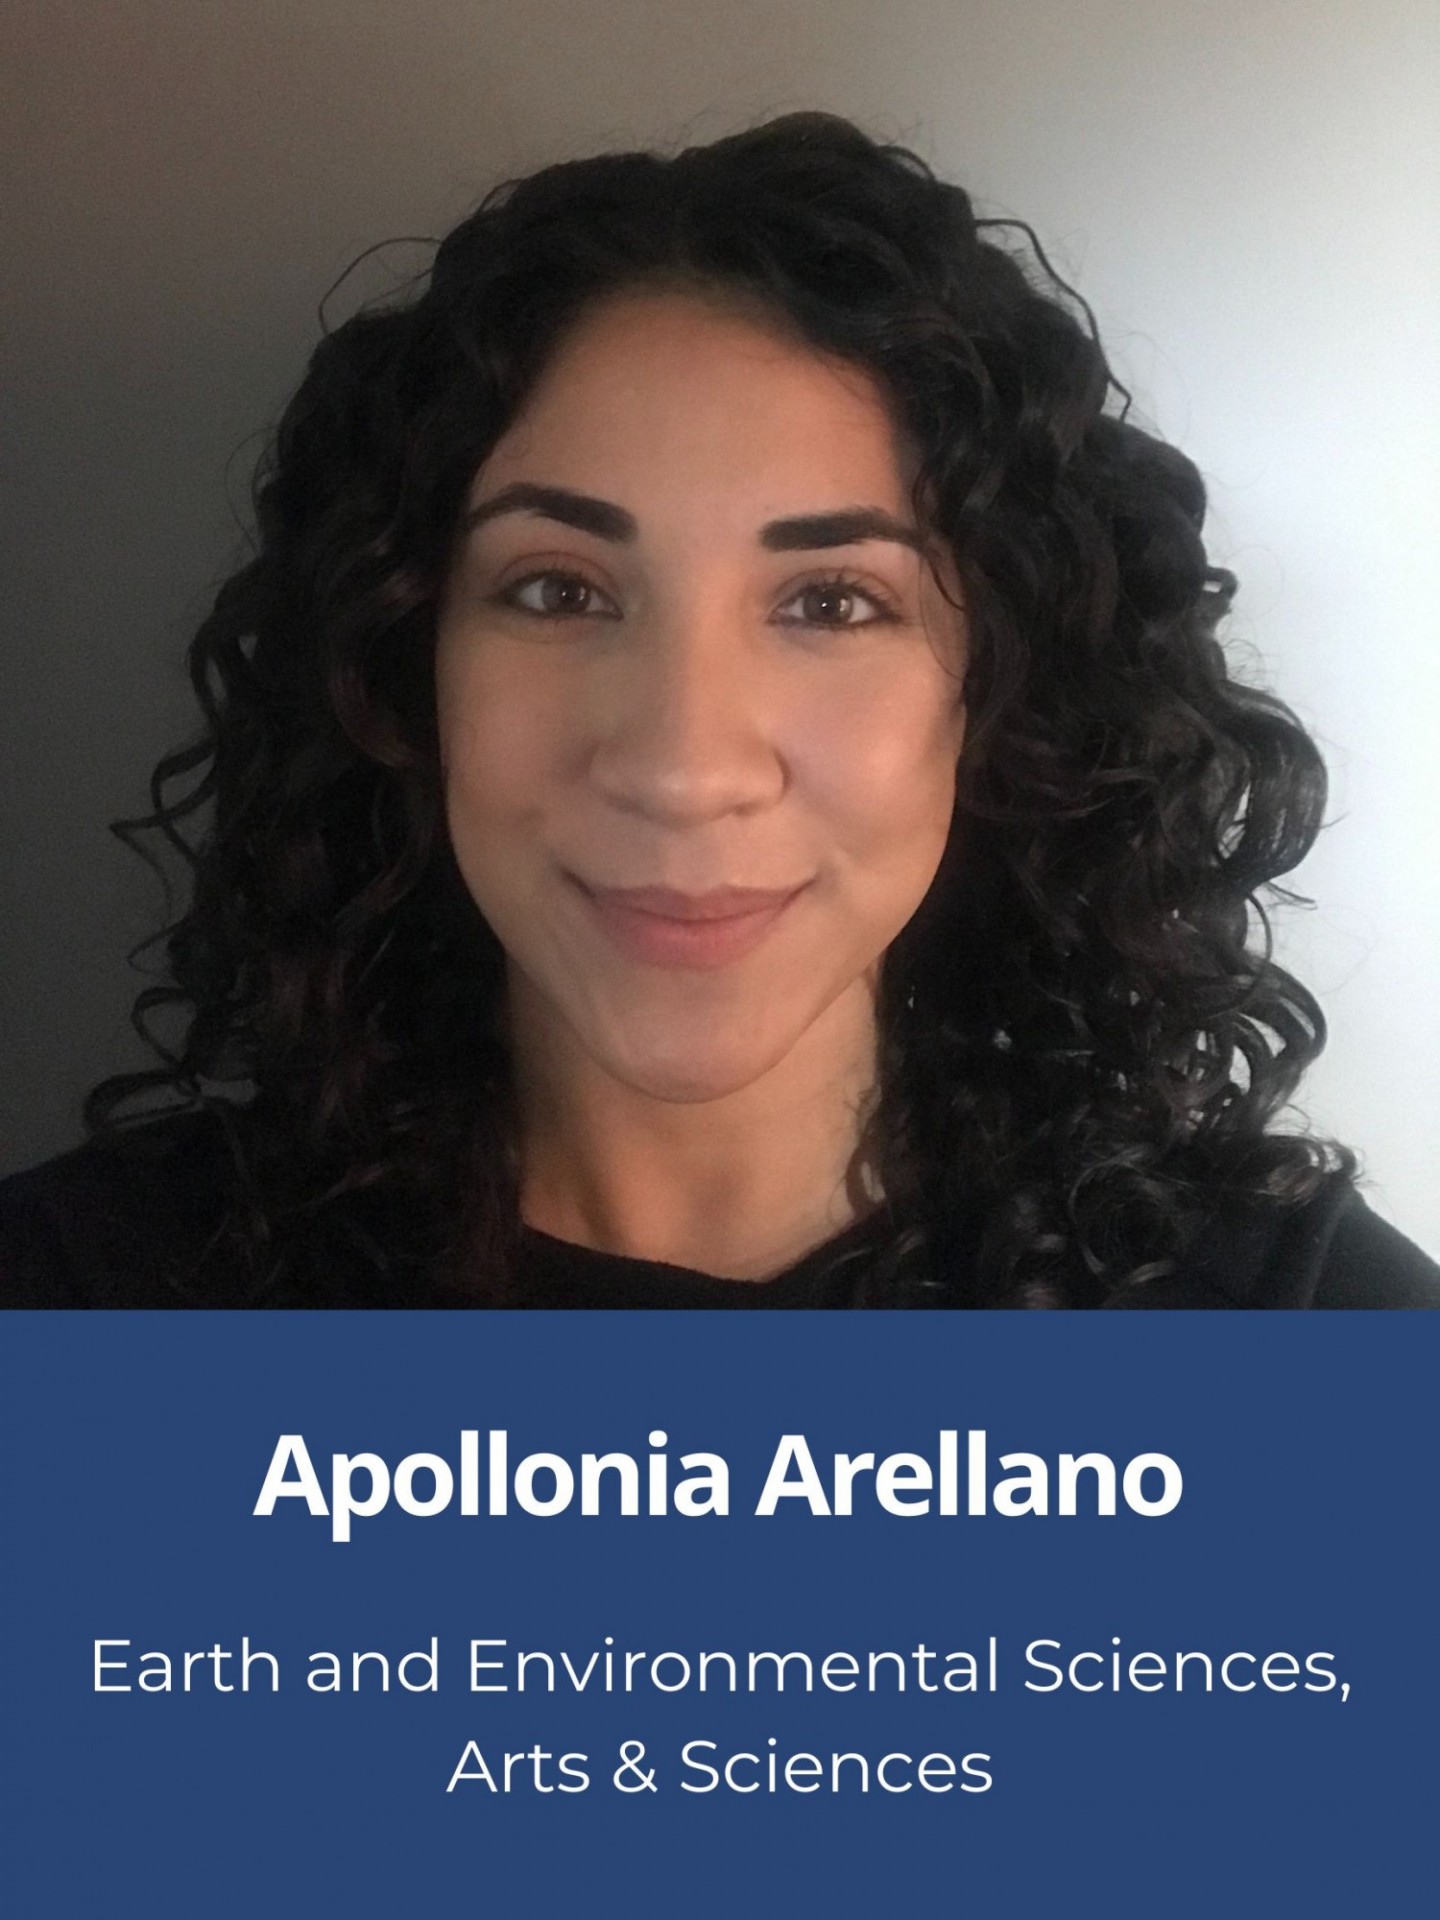 Picture of Apollonia Arellano, Earth and Environmental Sciences, Arts & Sciences